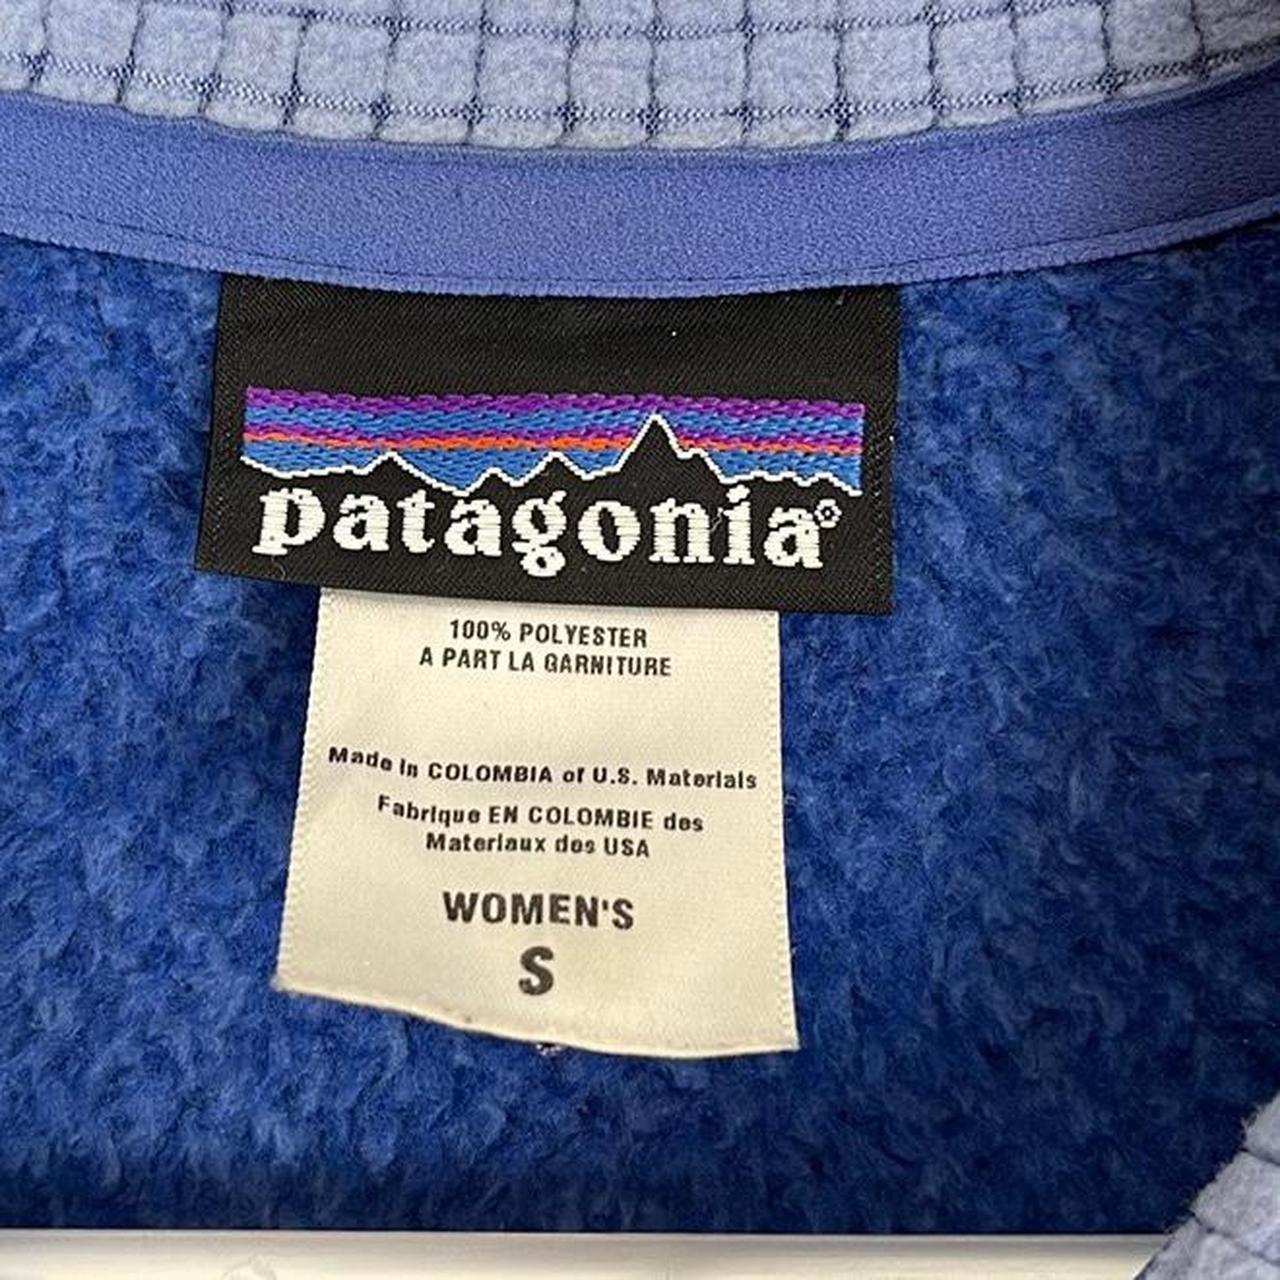 Product Image 3 - Patagonia Blue Fleece Jacket

🌊Free shipping